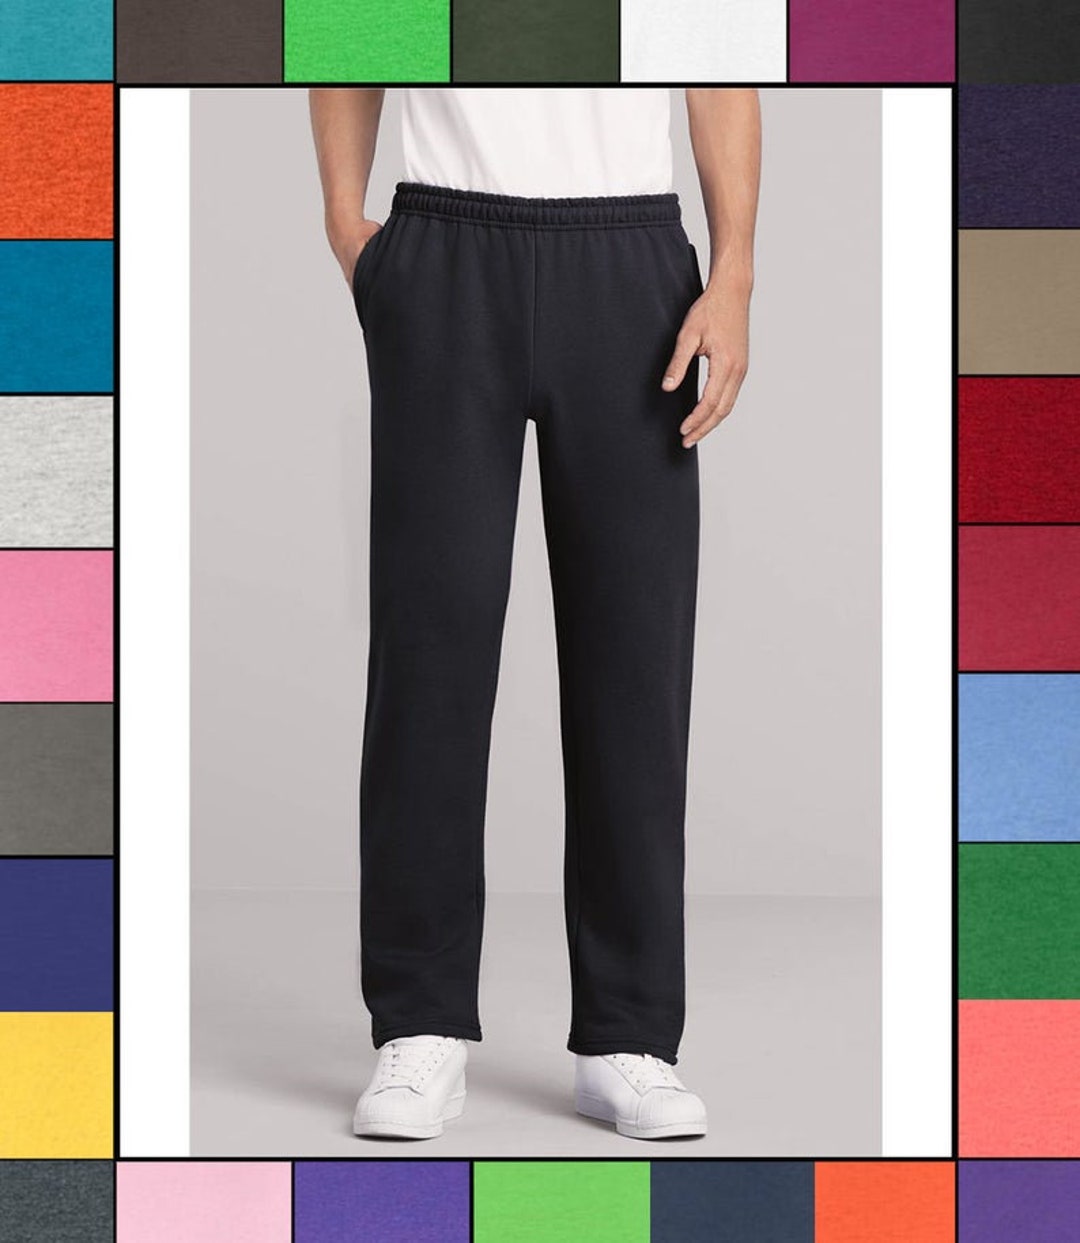 The Gildan Adult Heavy Blend 8 oz Open-Bottom Sweatpants with Pockets -  SPORT GREY - 4XL 